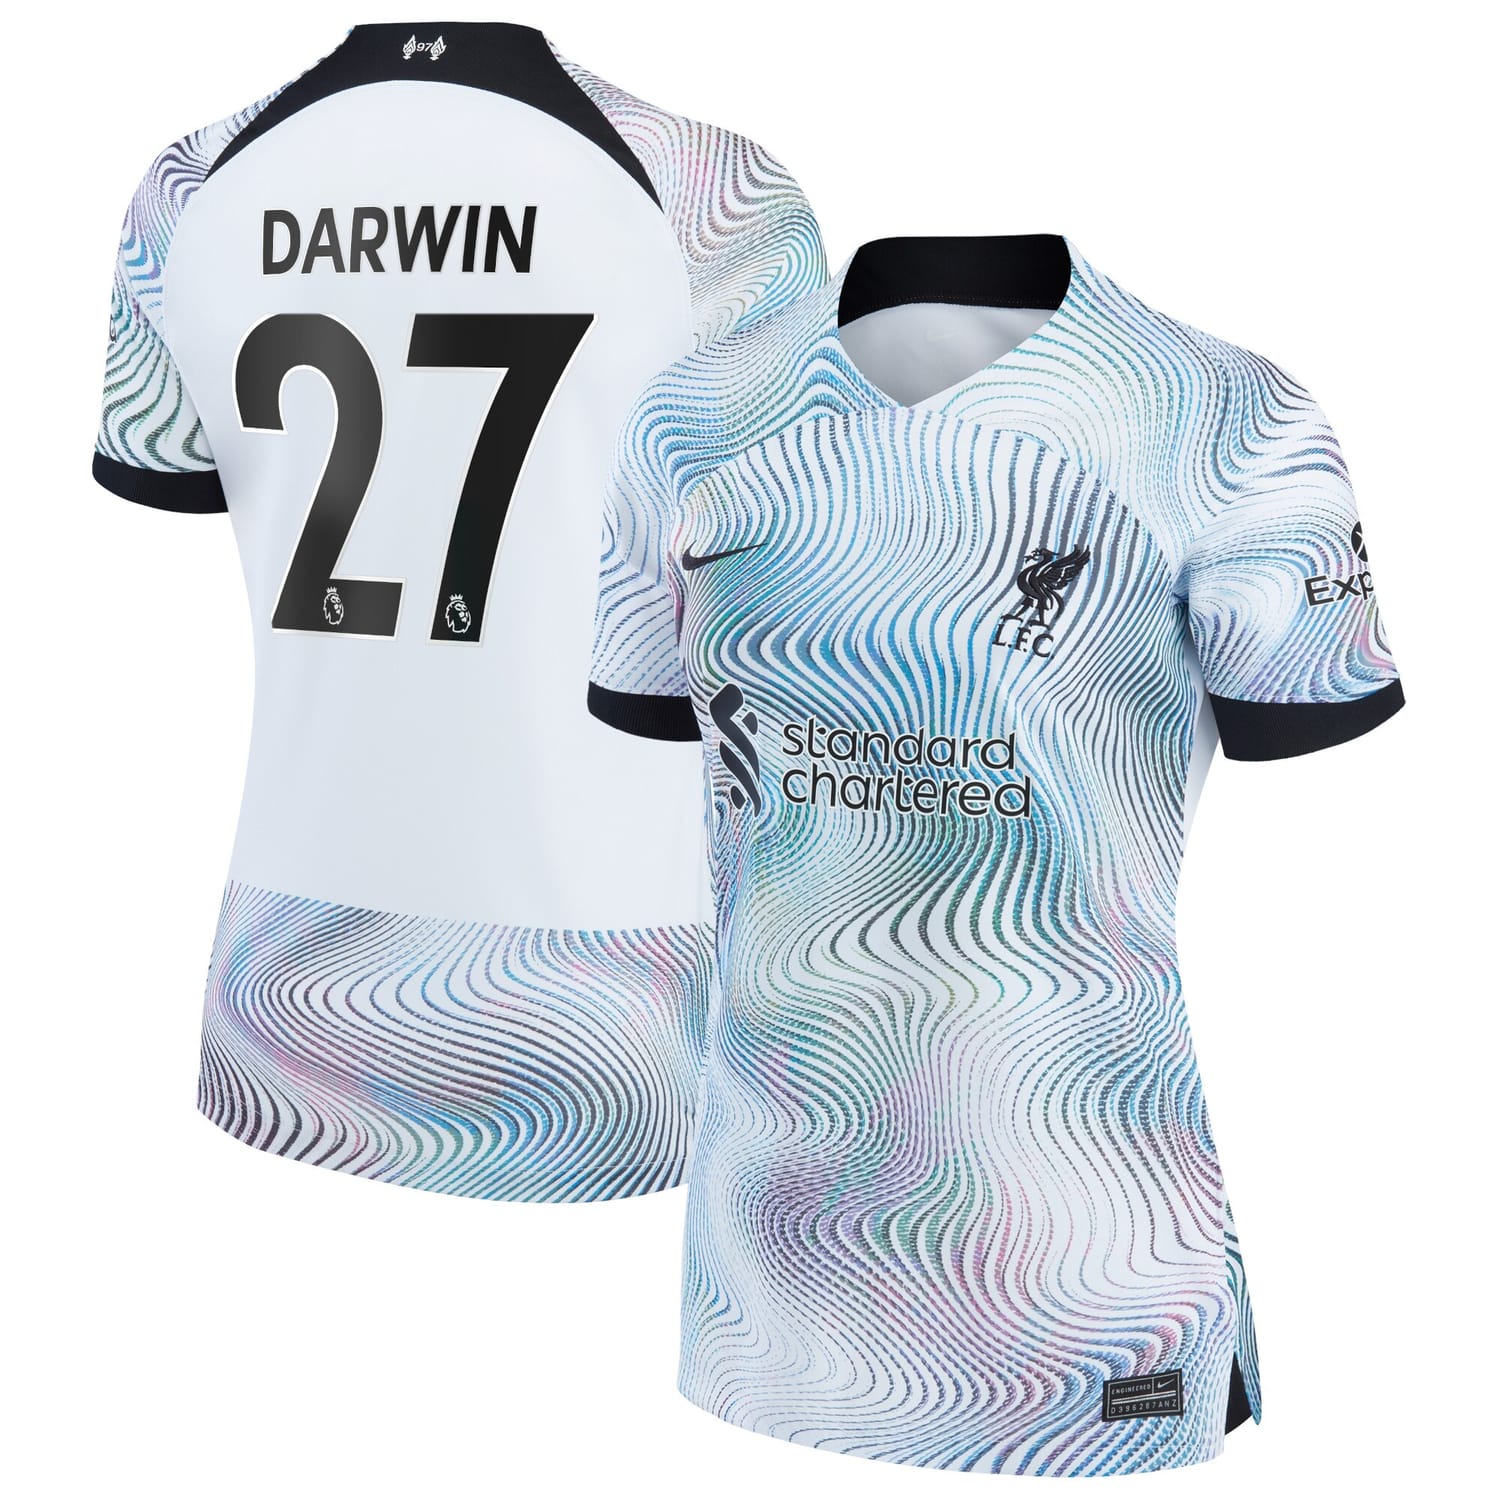 Premier League Liverpool Away Jersey Shirt 2022-23 player Darwin Núñez 27 printing for Women